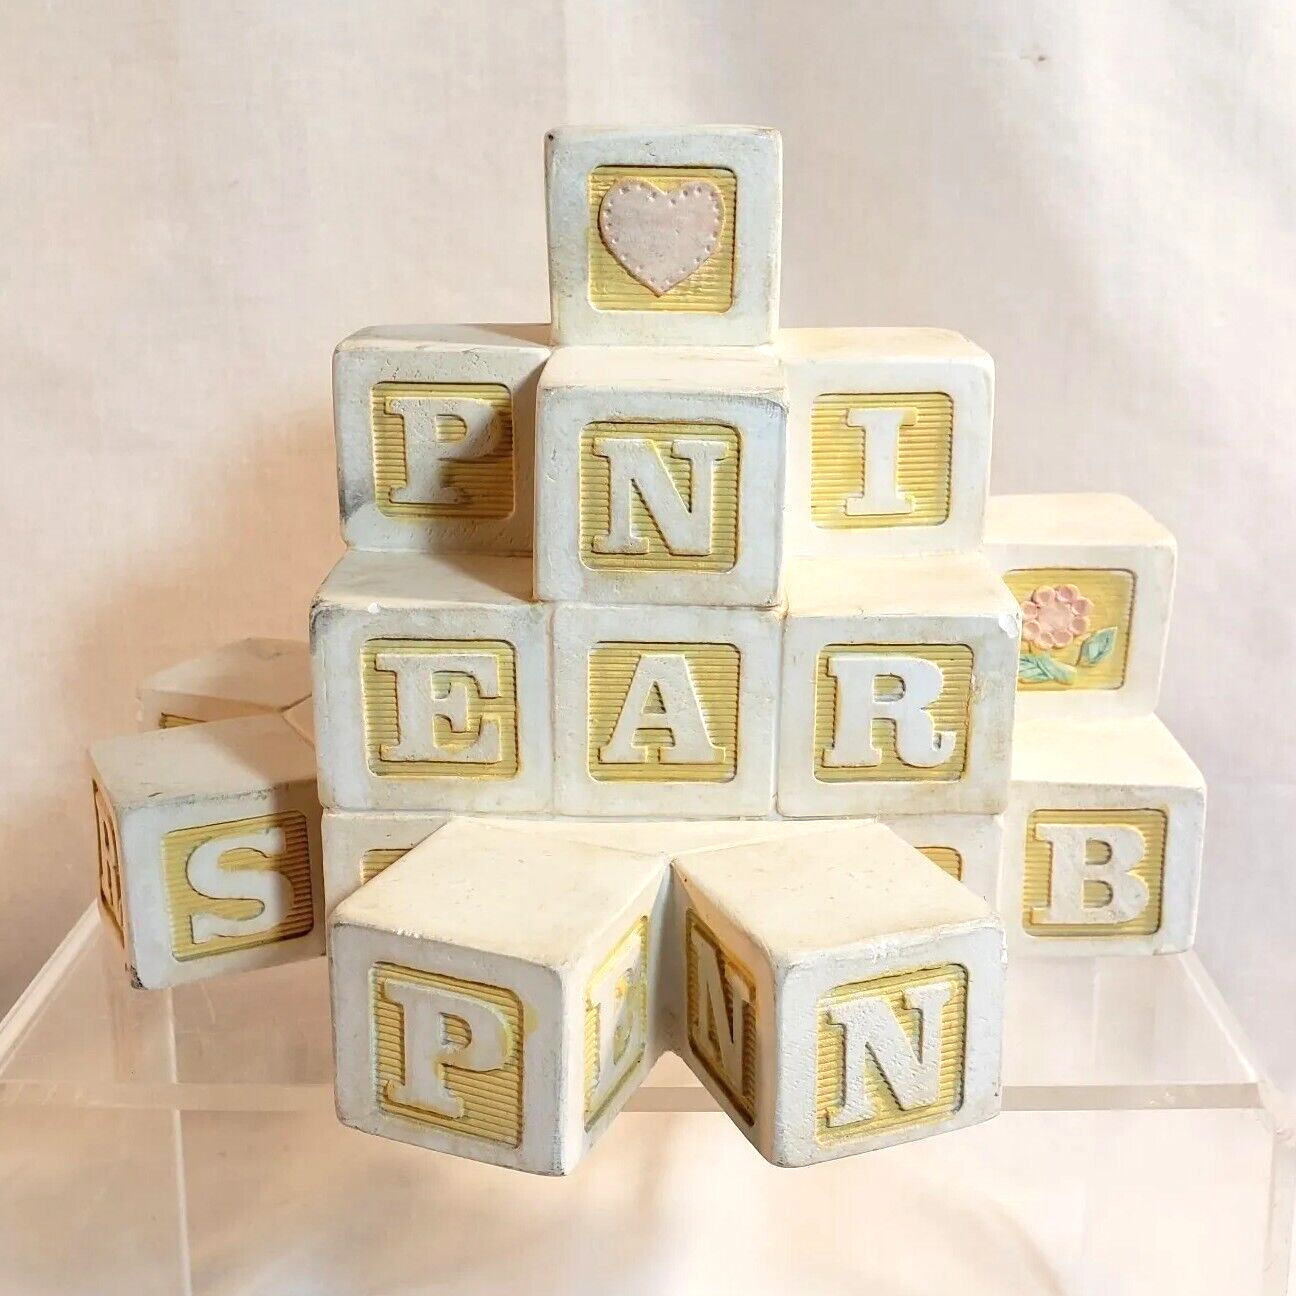 Vintage Penni Bears Block Display Stand Miniature Collection Display